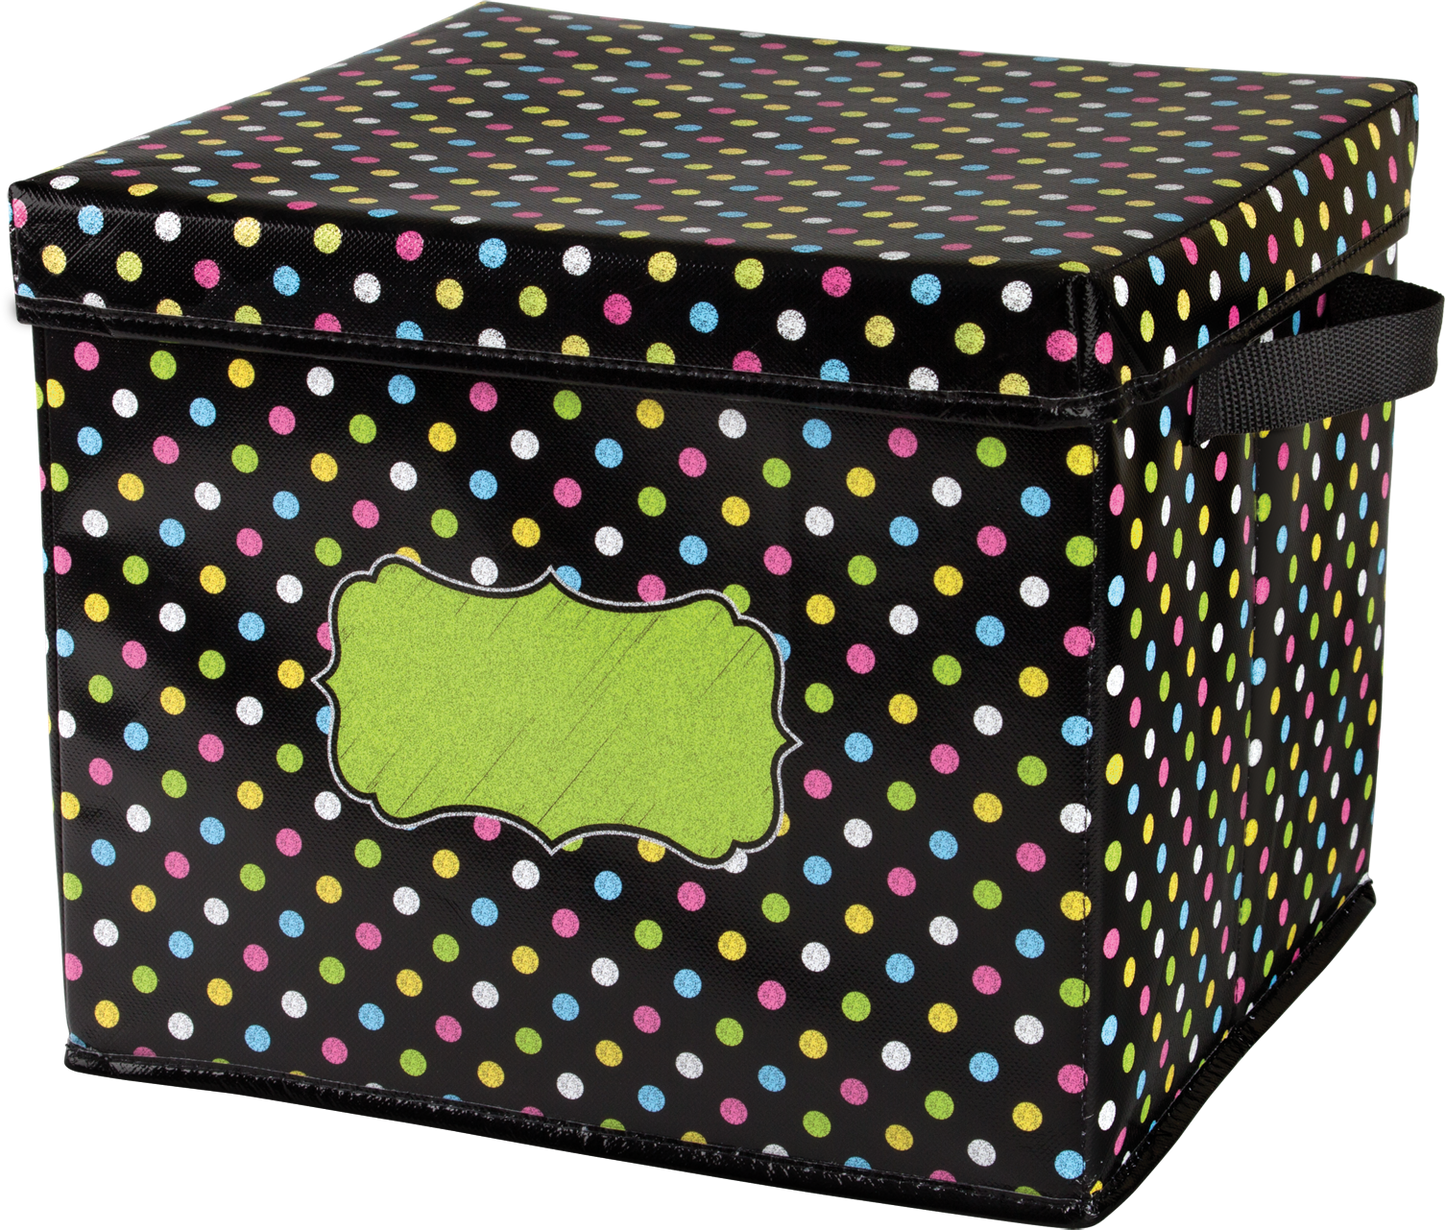 Chalkboard Brights Storage Box